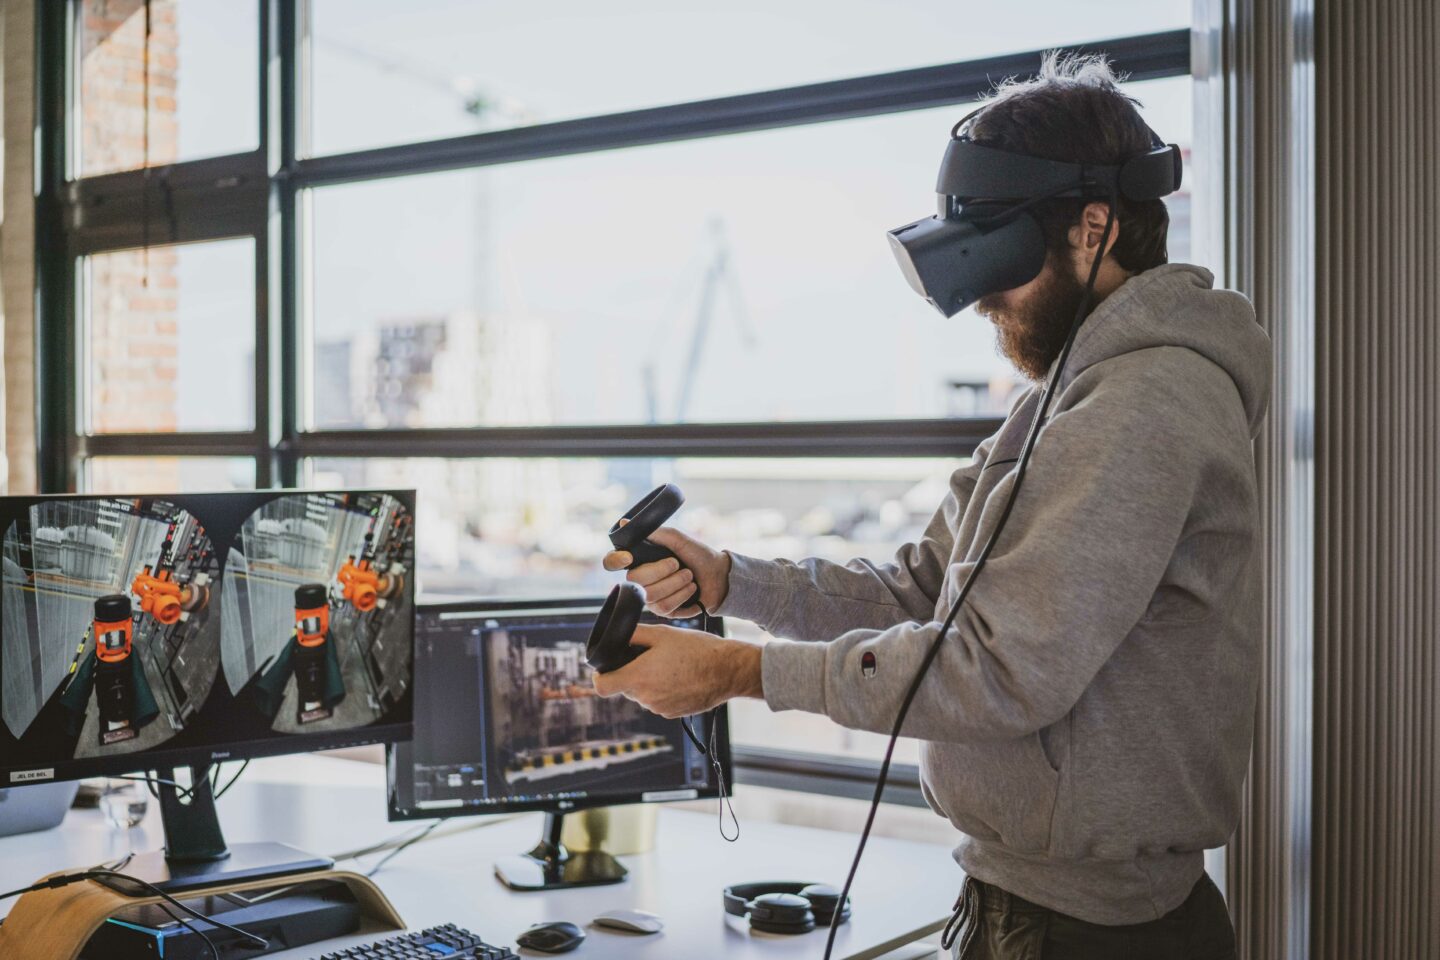 Virtual reality training simulators